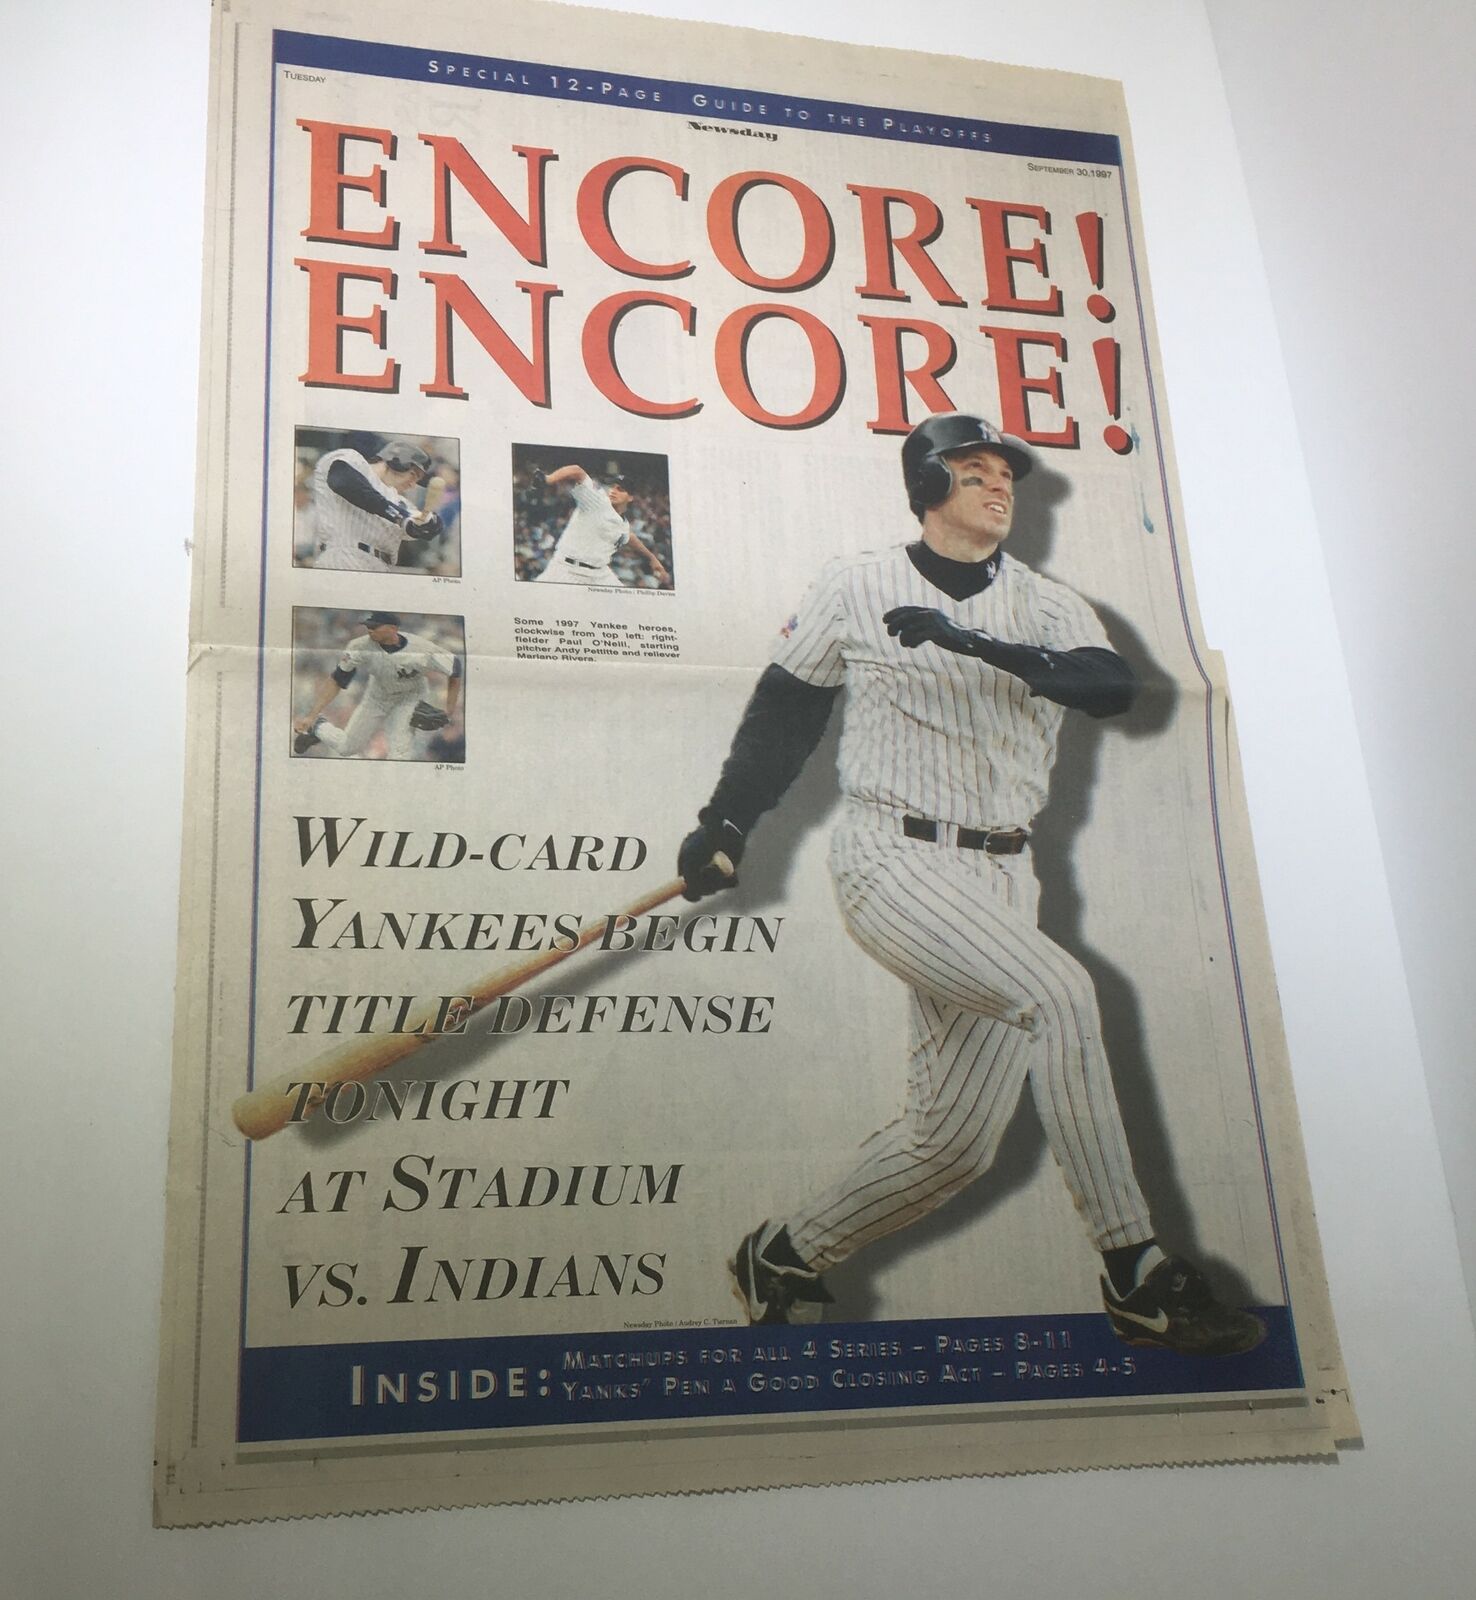 Newsday: Sept 30 1997 Encore Encore 